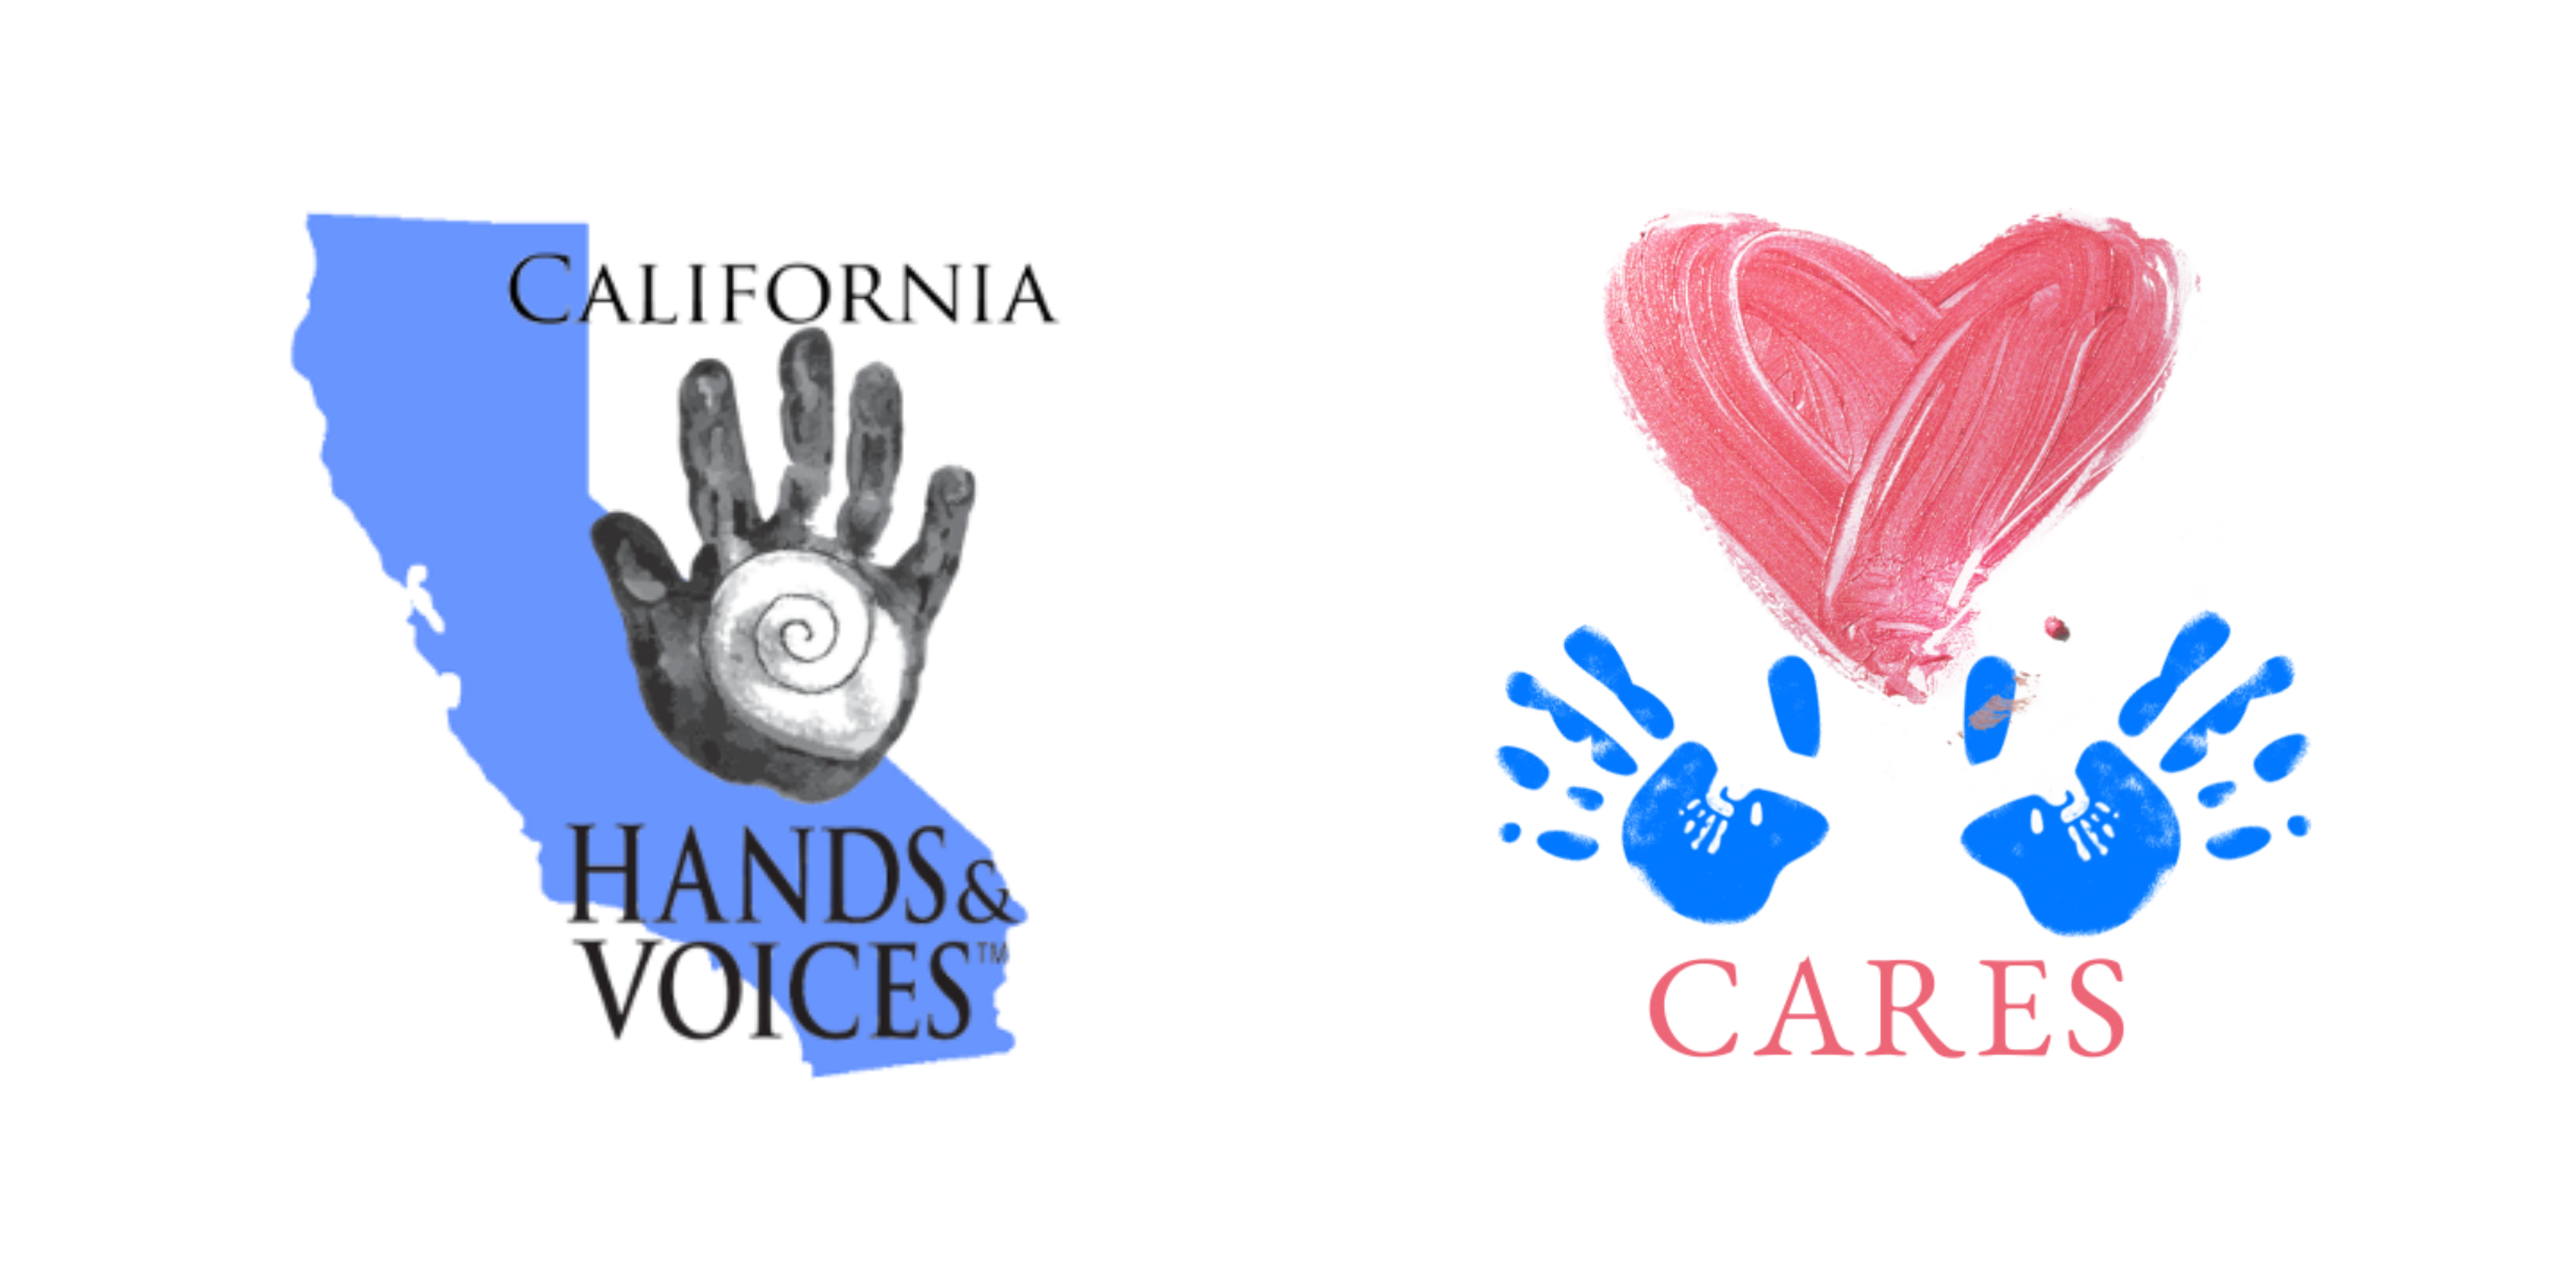 California Hands & Voices CARES CRPC